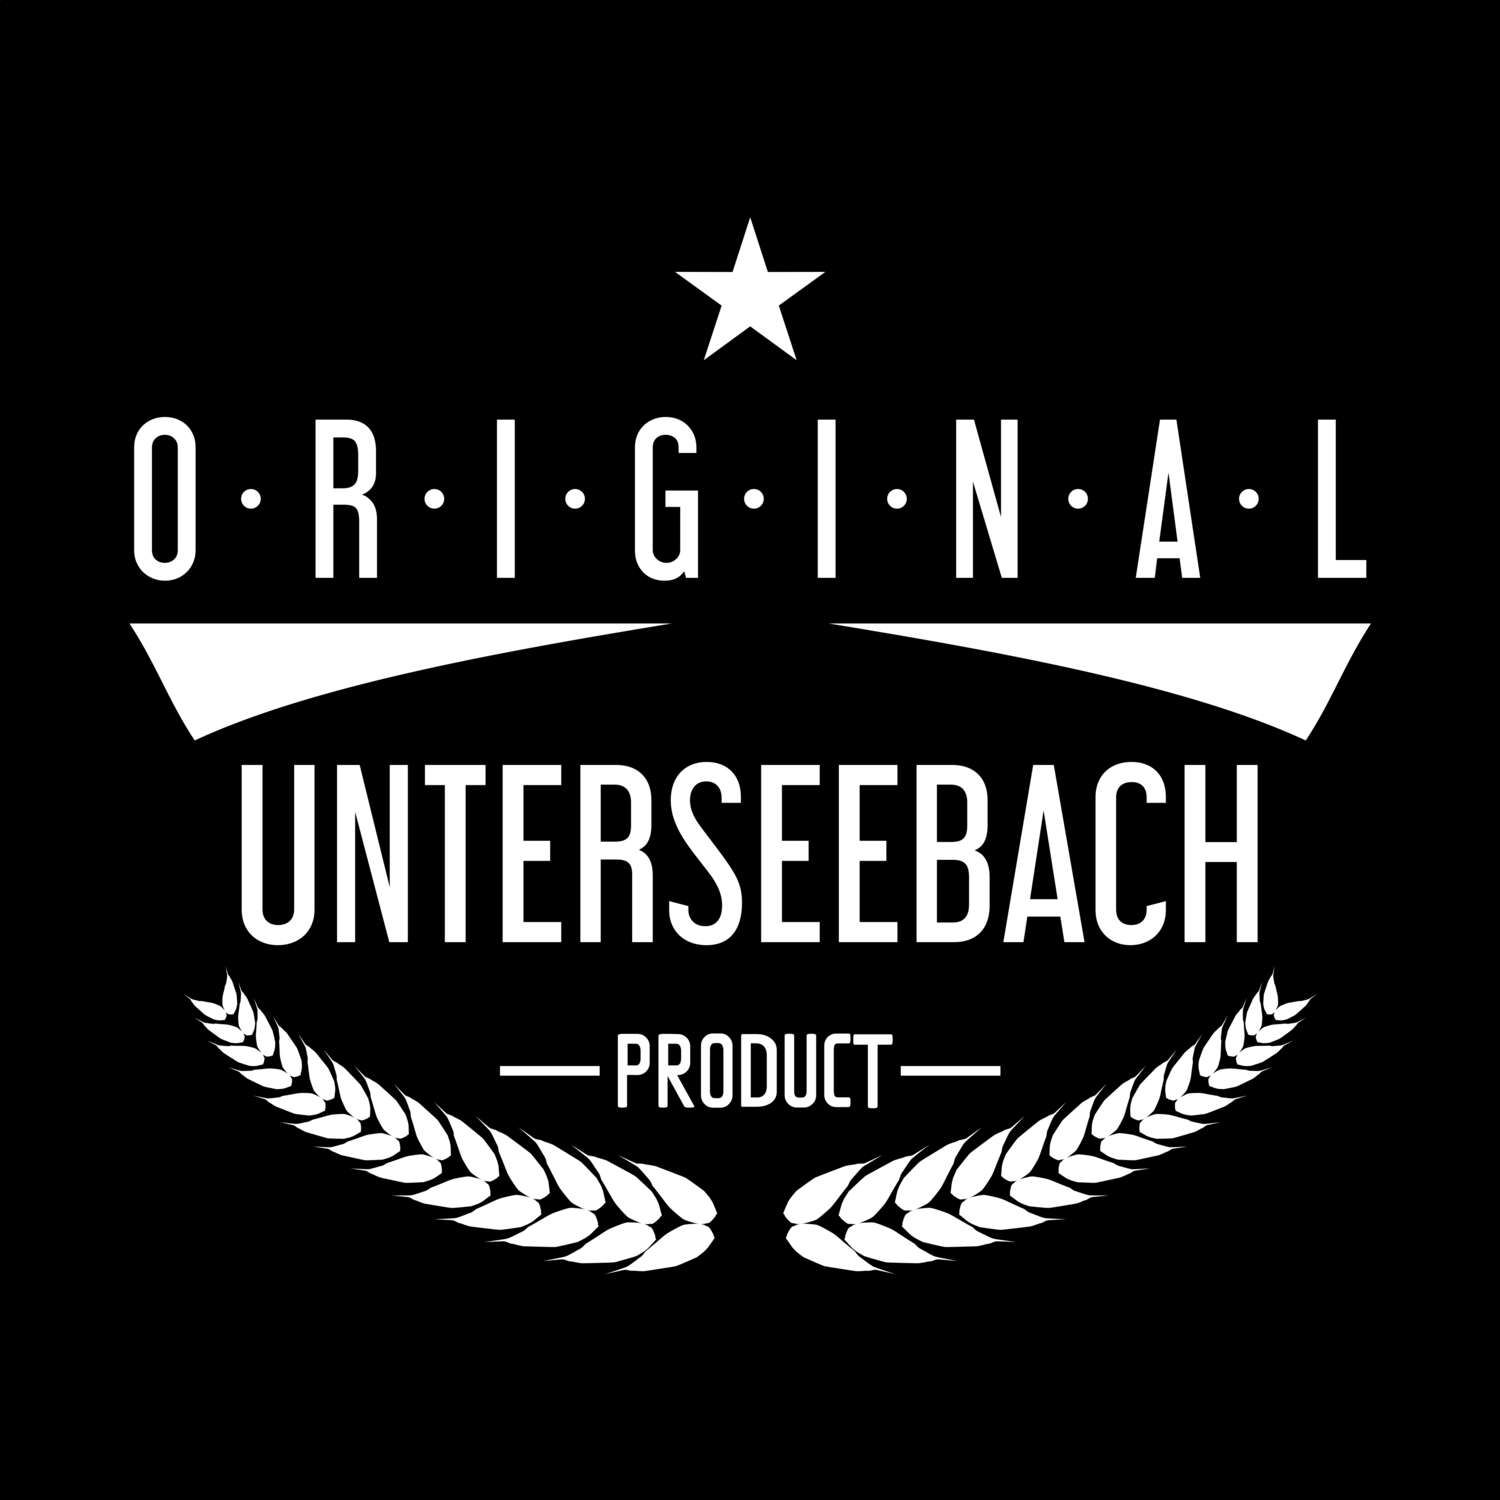 Unterseebach T-Shirt »Original Product«